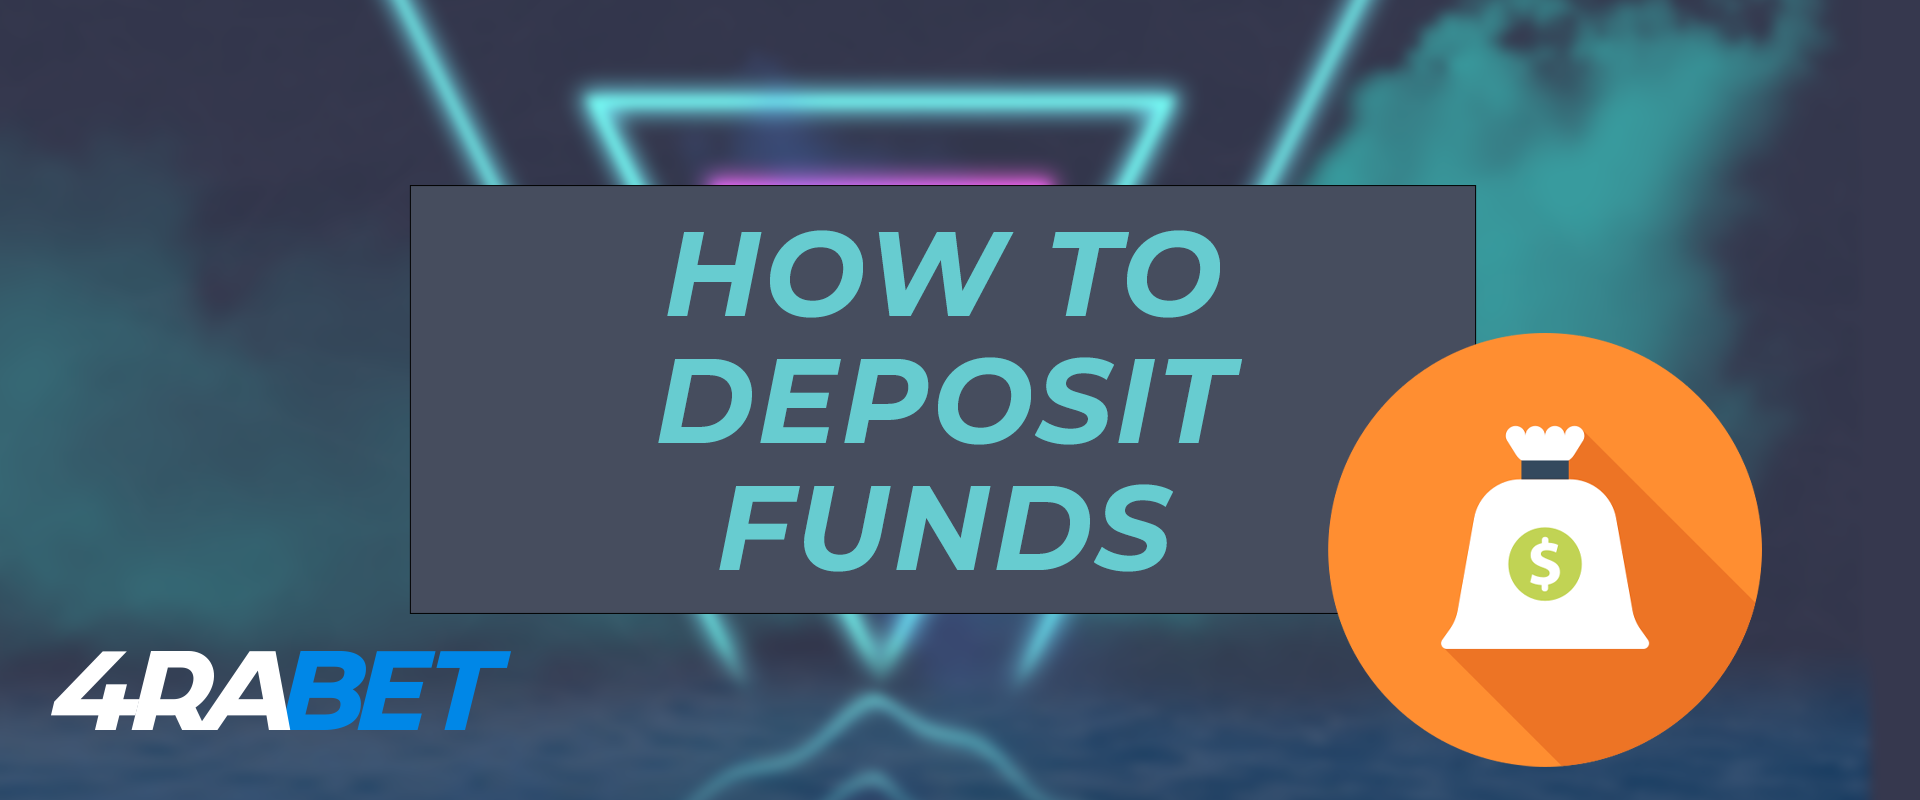 How to deposit money on the 4rabet.